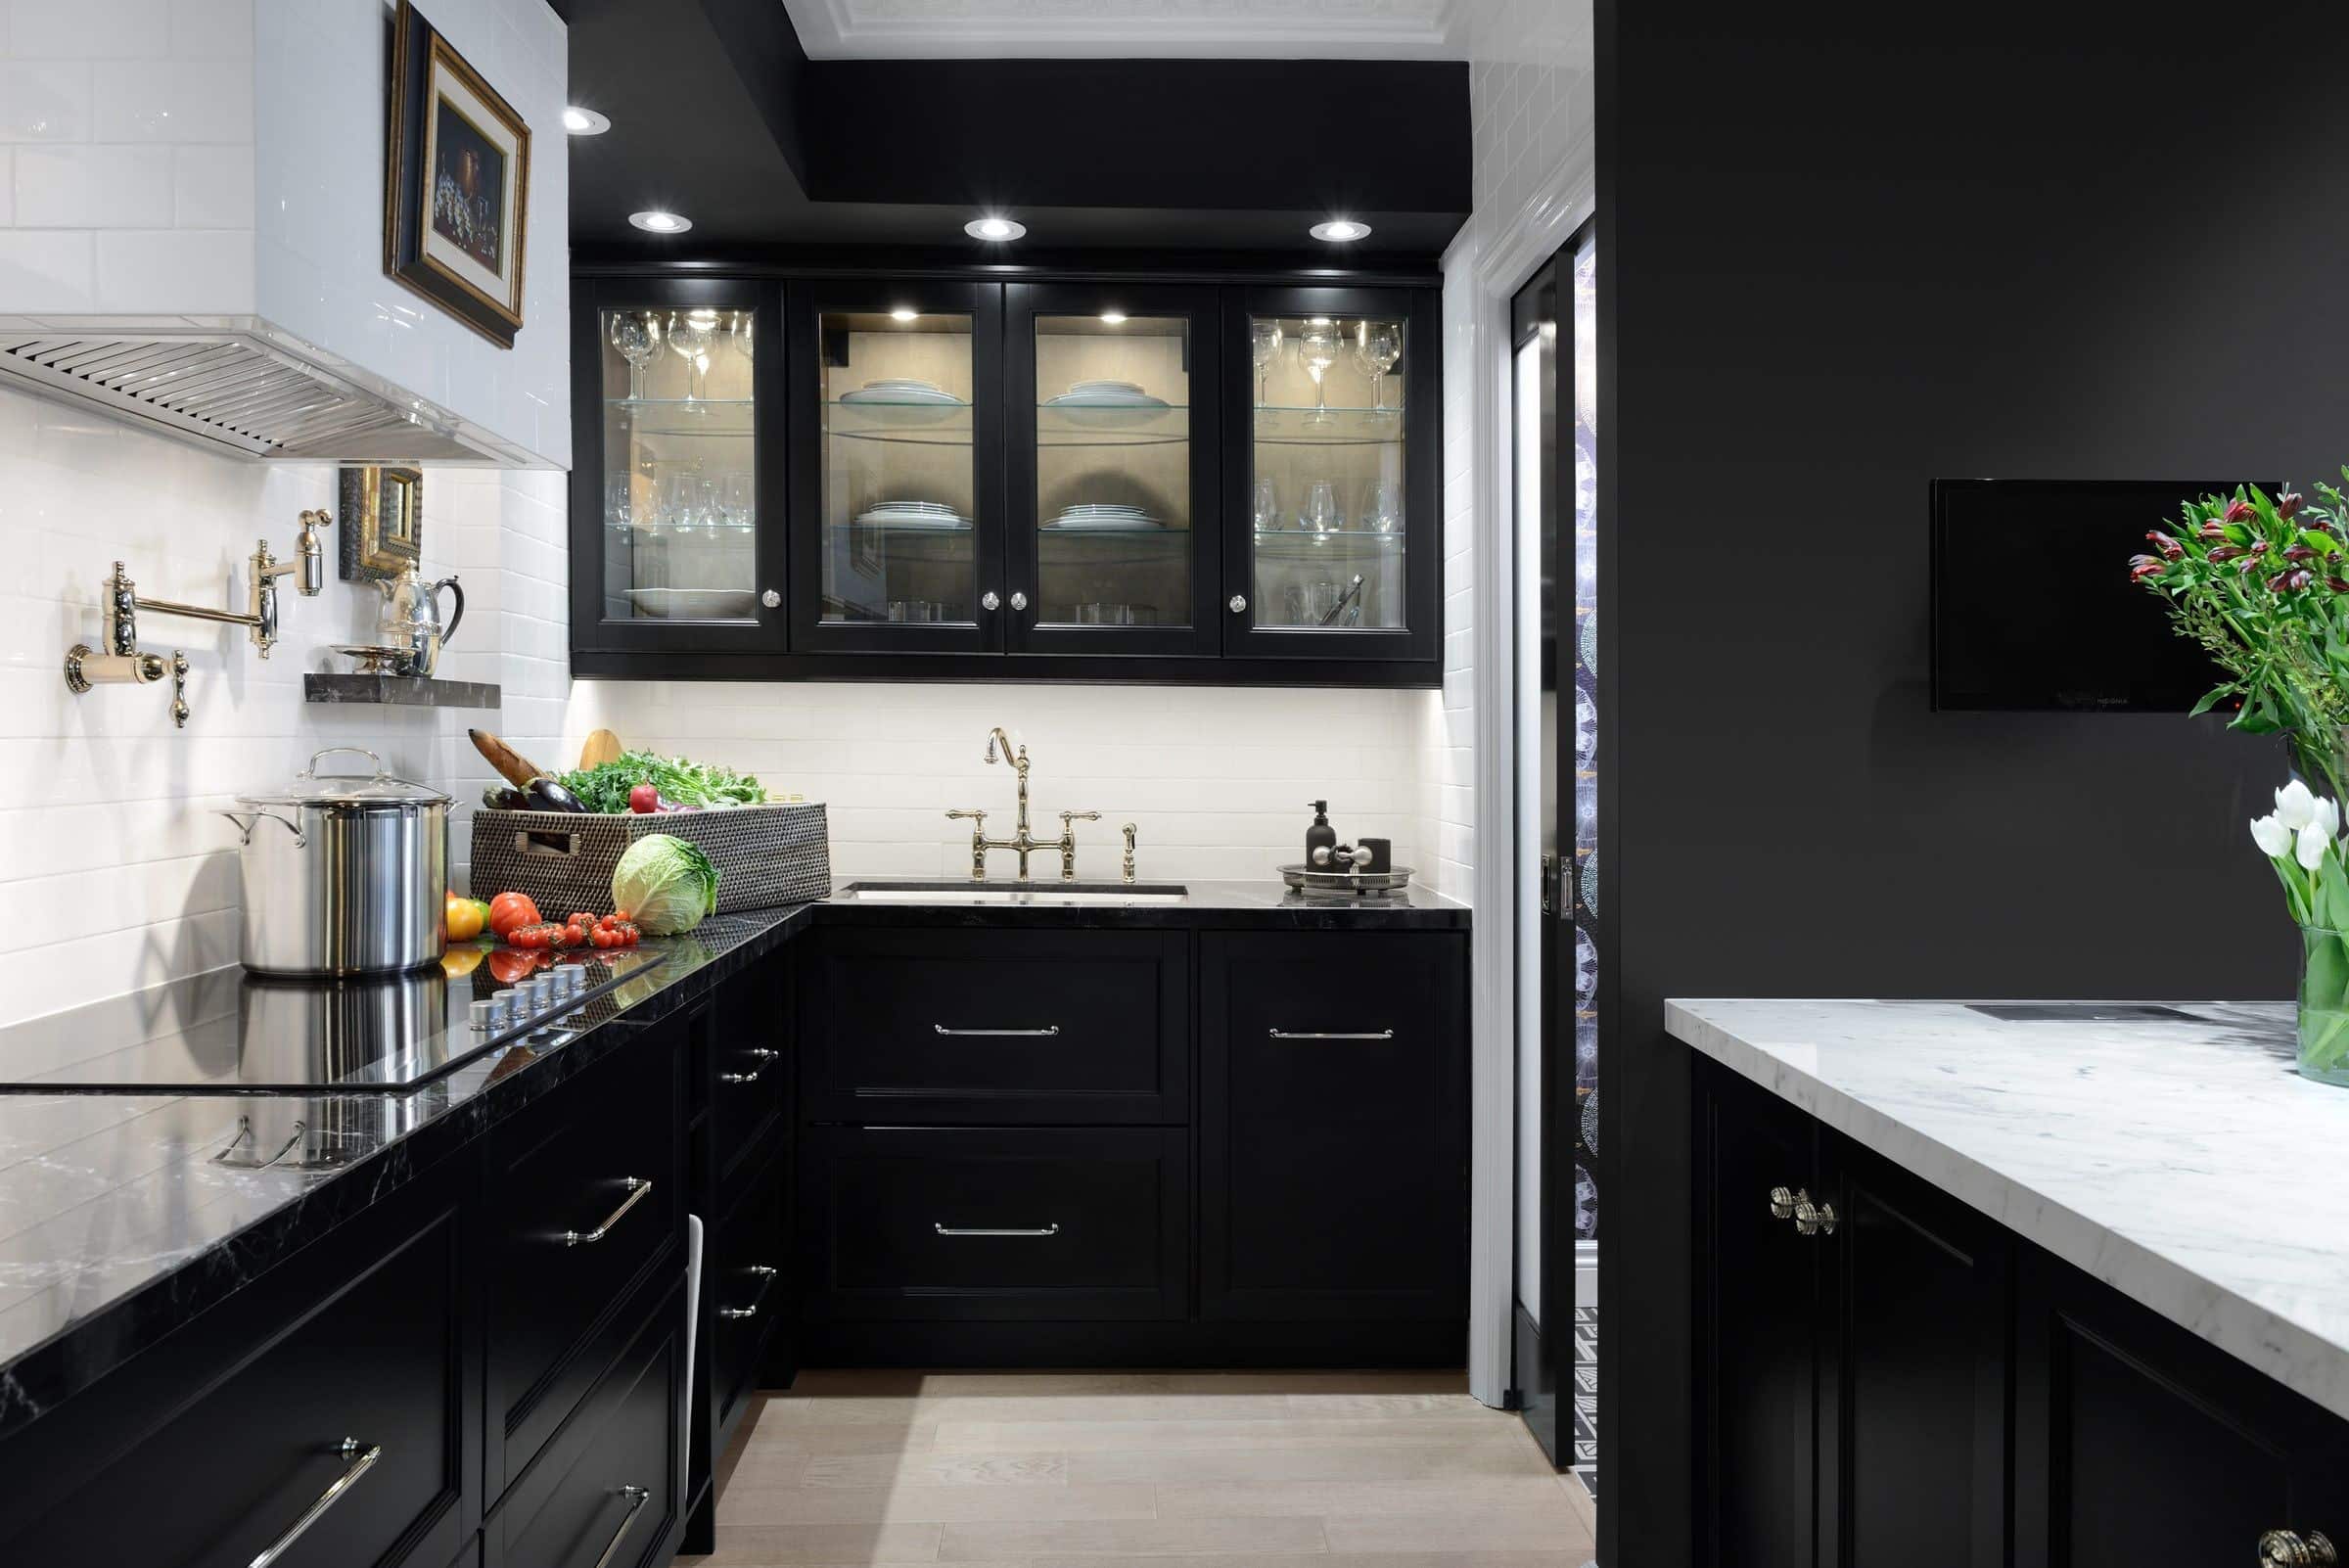 Desain dapur minimalis kabinet hitam Thegorbalsla